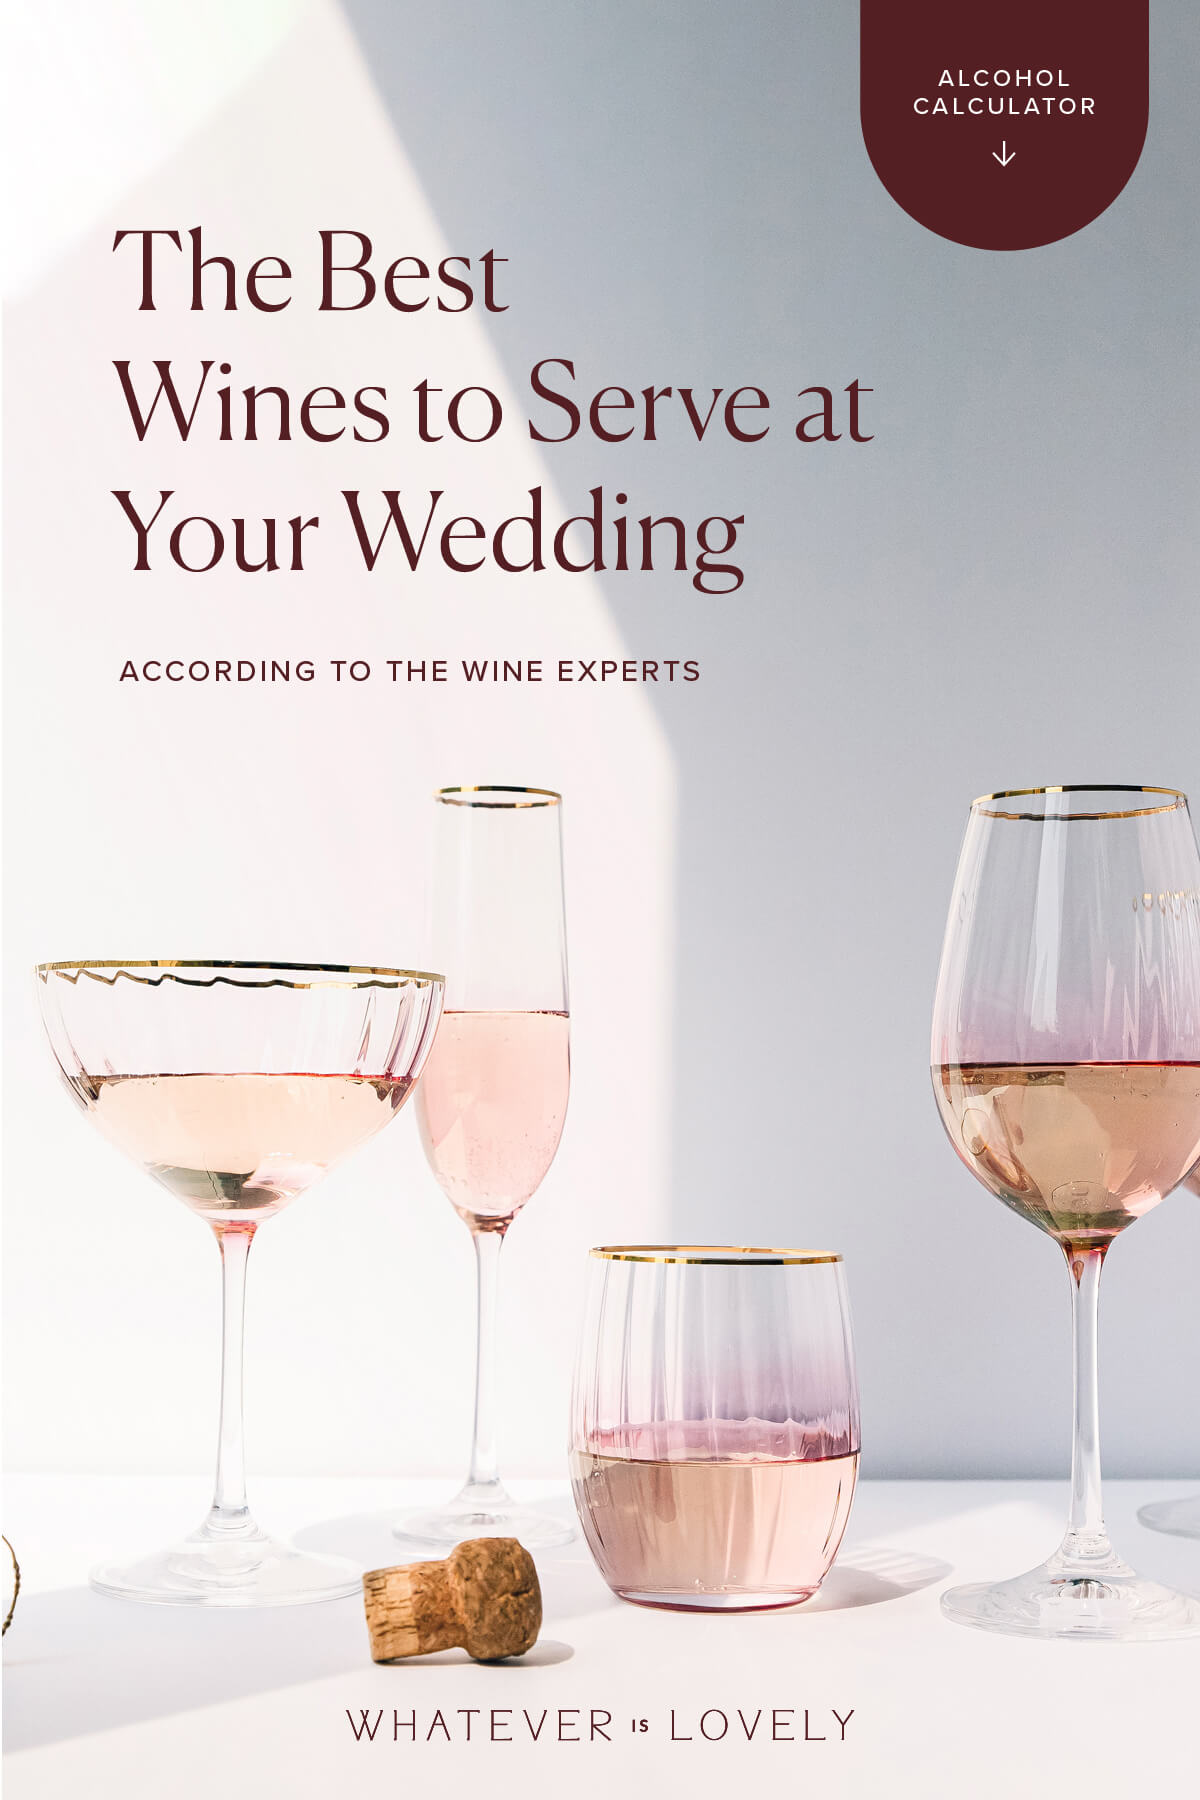 https://lovelyweddingskc.com/wp-content/uploads/sites/27677/2021/02/Choosing-Wine-for-Wedding-01.jpg